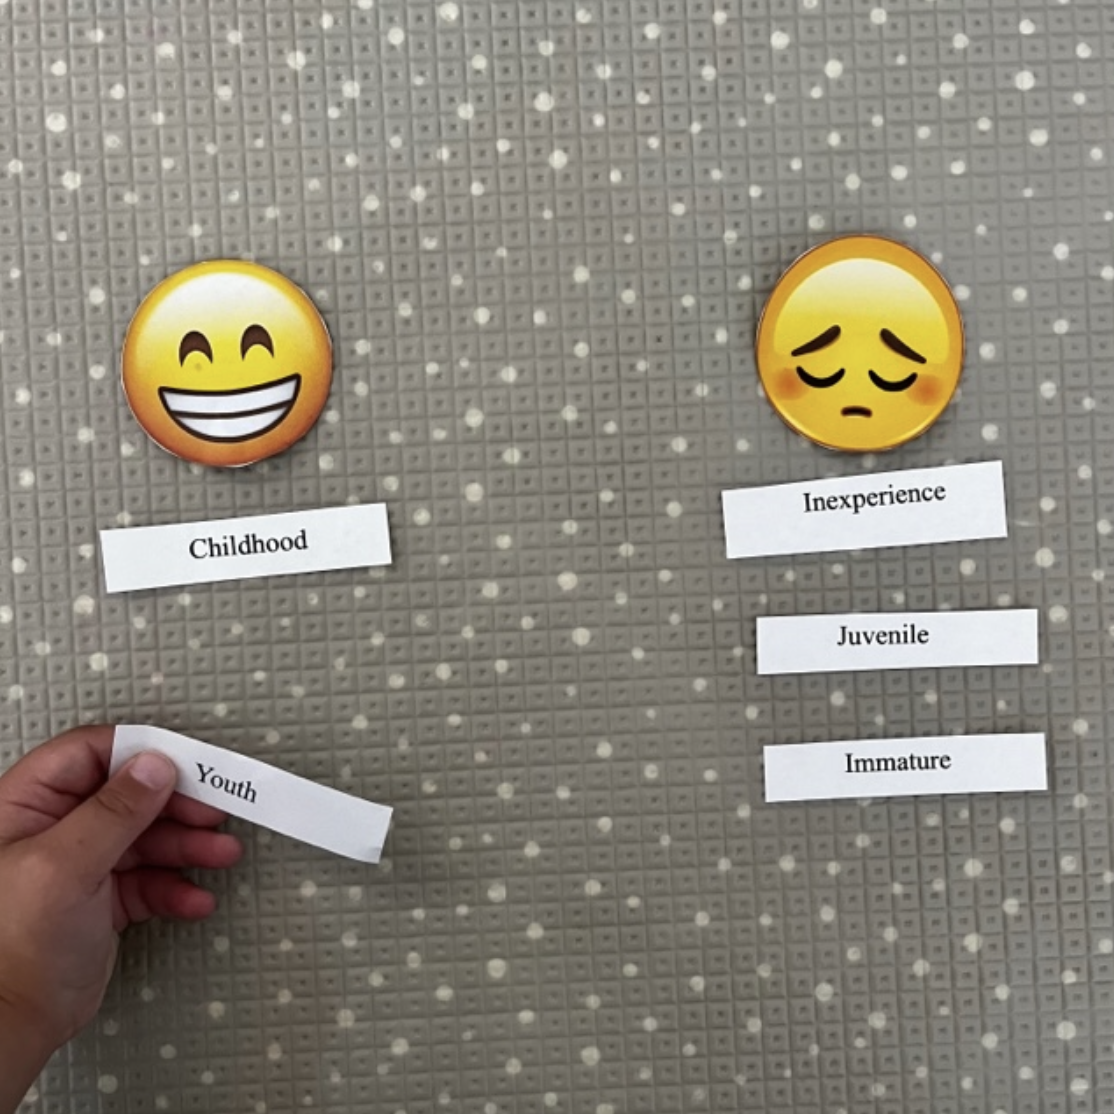 Connotations - The Emoji Challenge